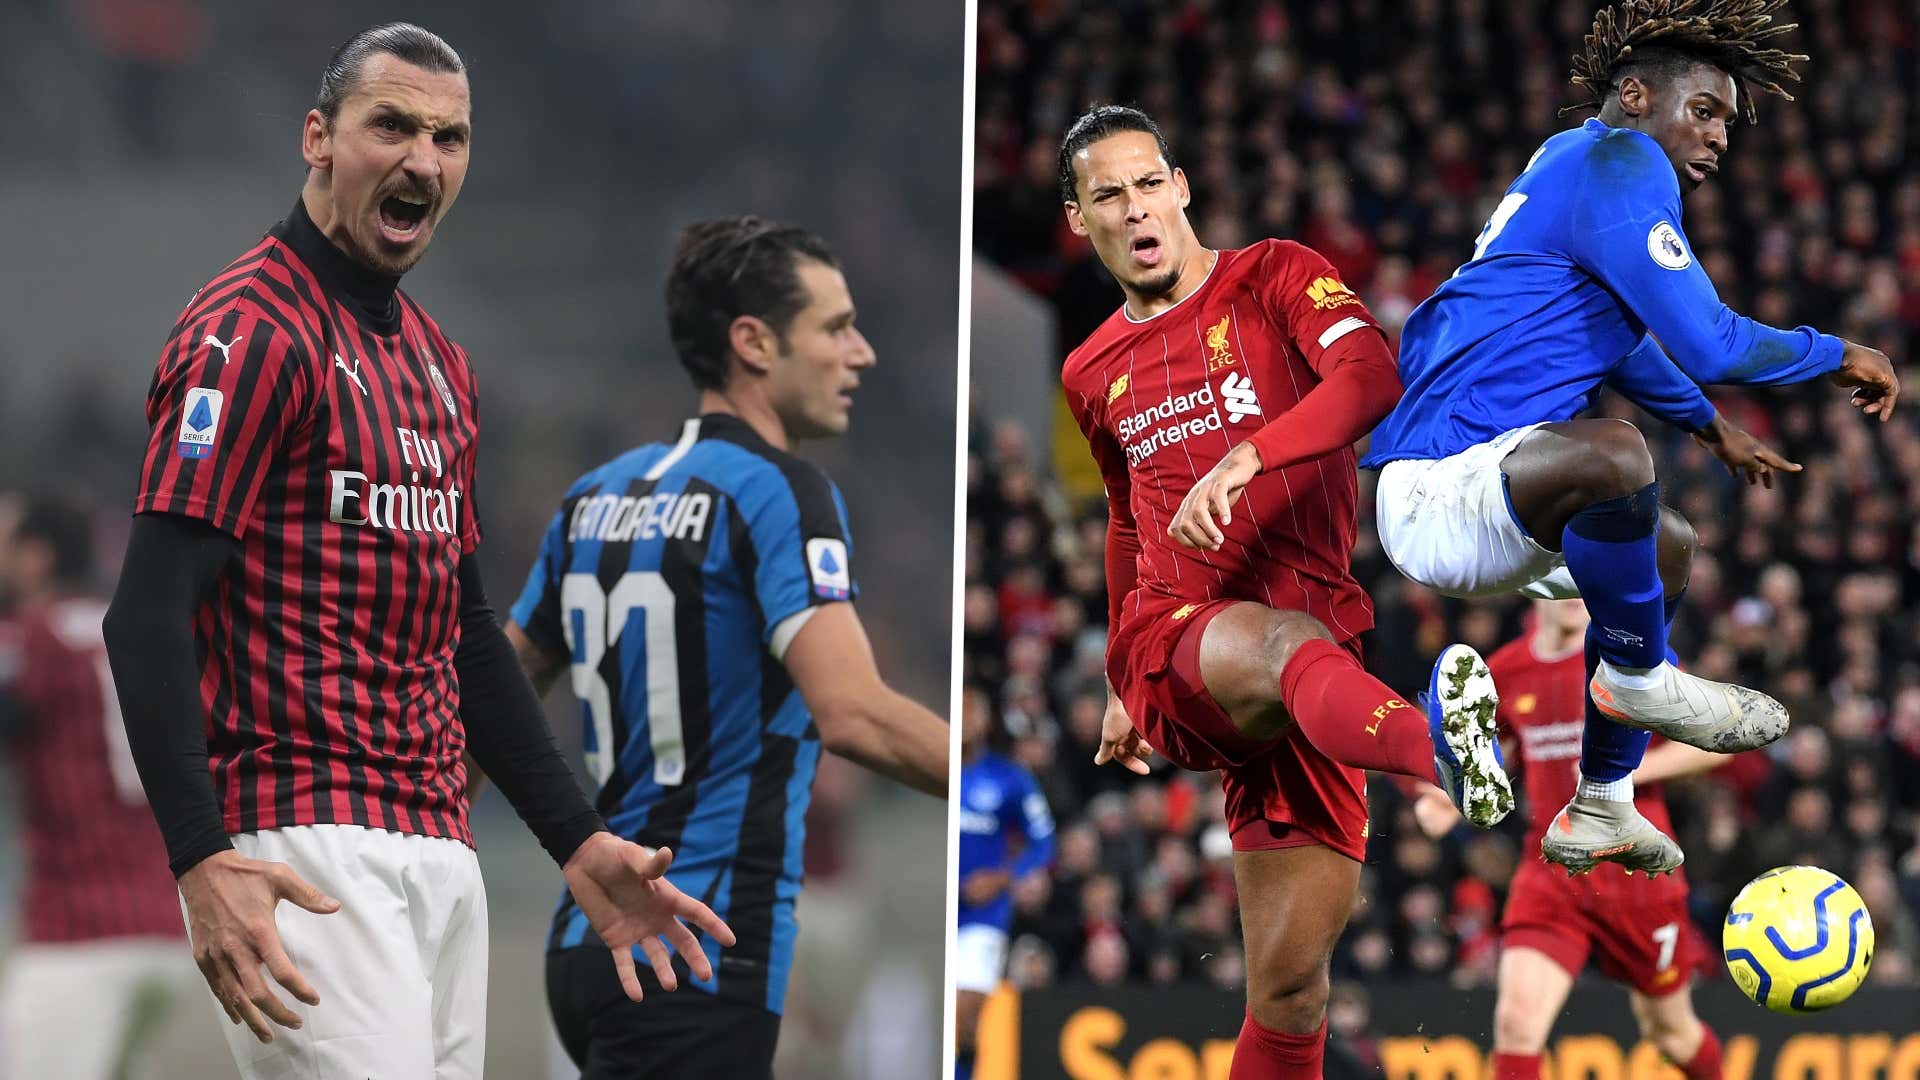 Inter vs MIlan, Liverpool vs Everton